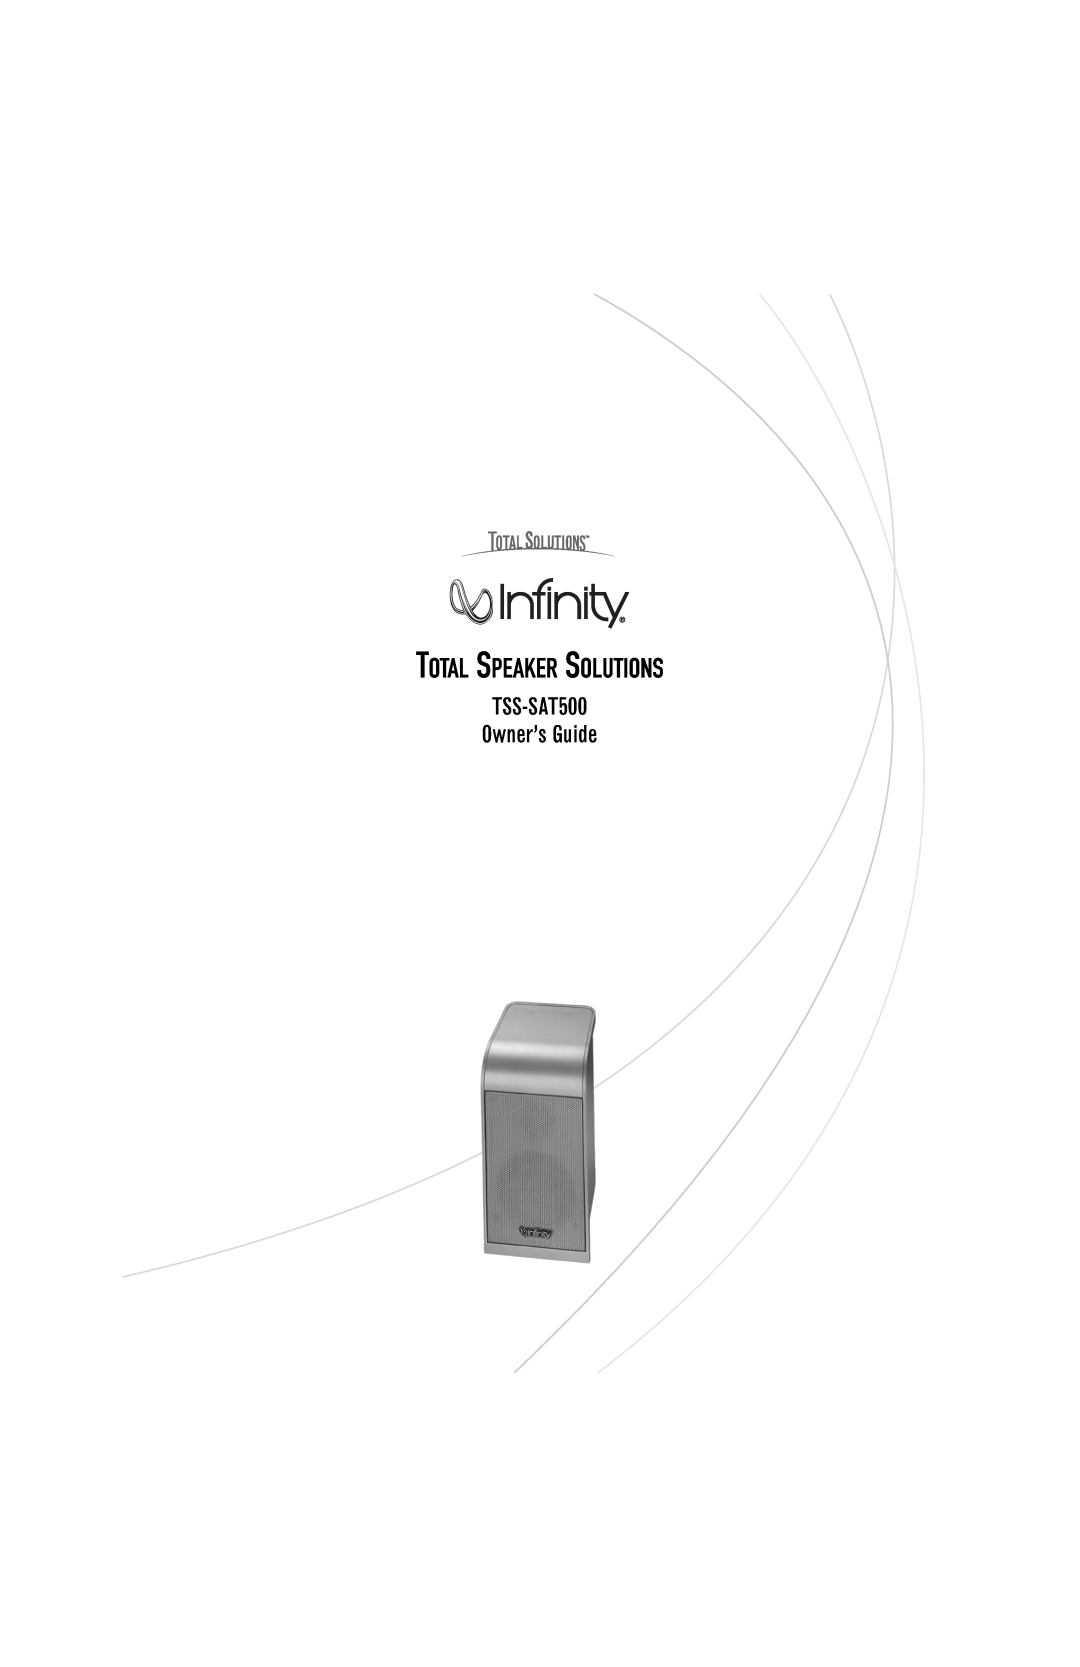 Infinity manual Total Speaker Solutions, TSS-SAT500 Owner’s Guide 